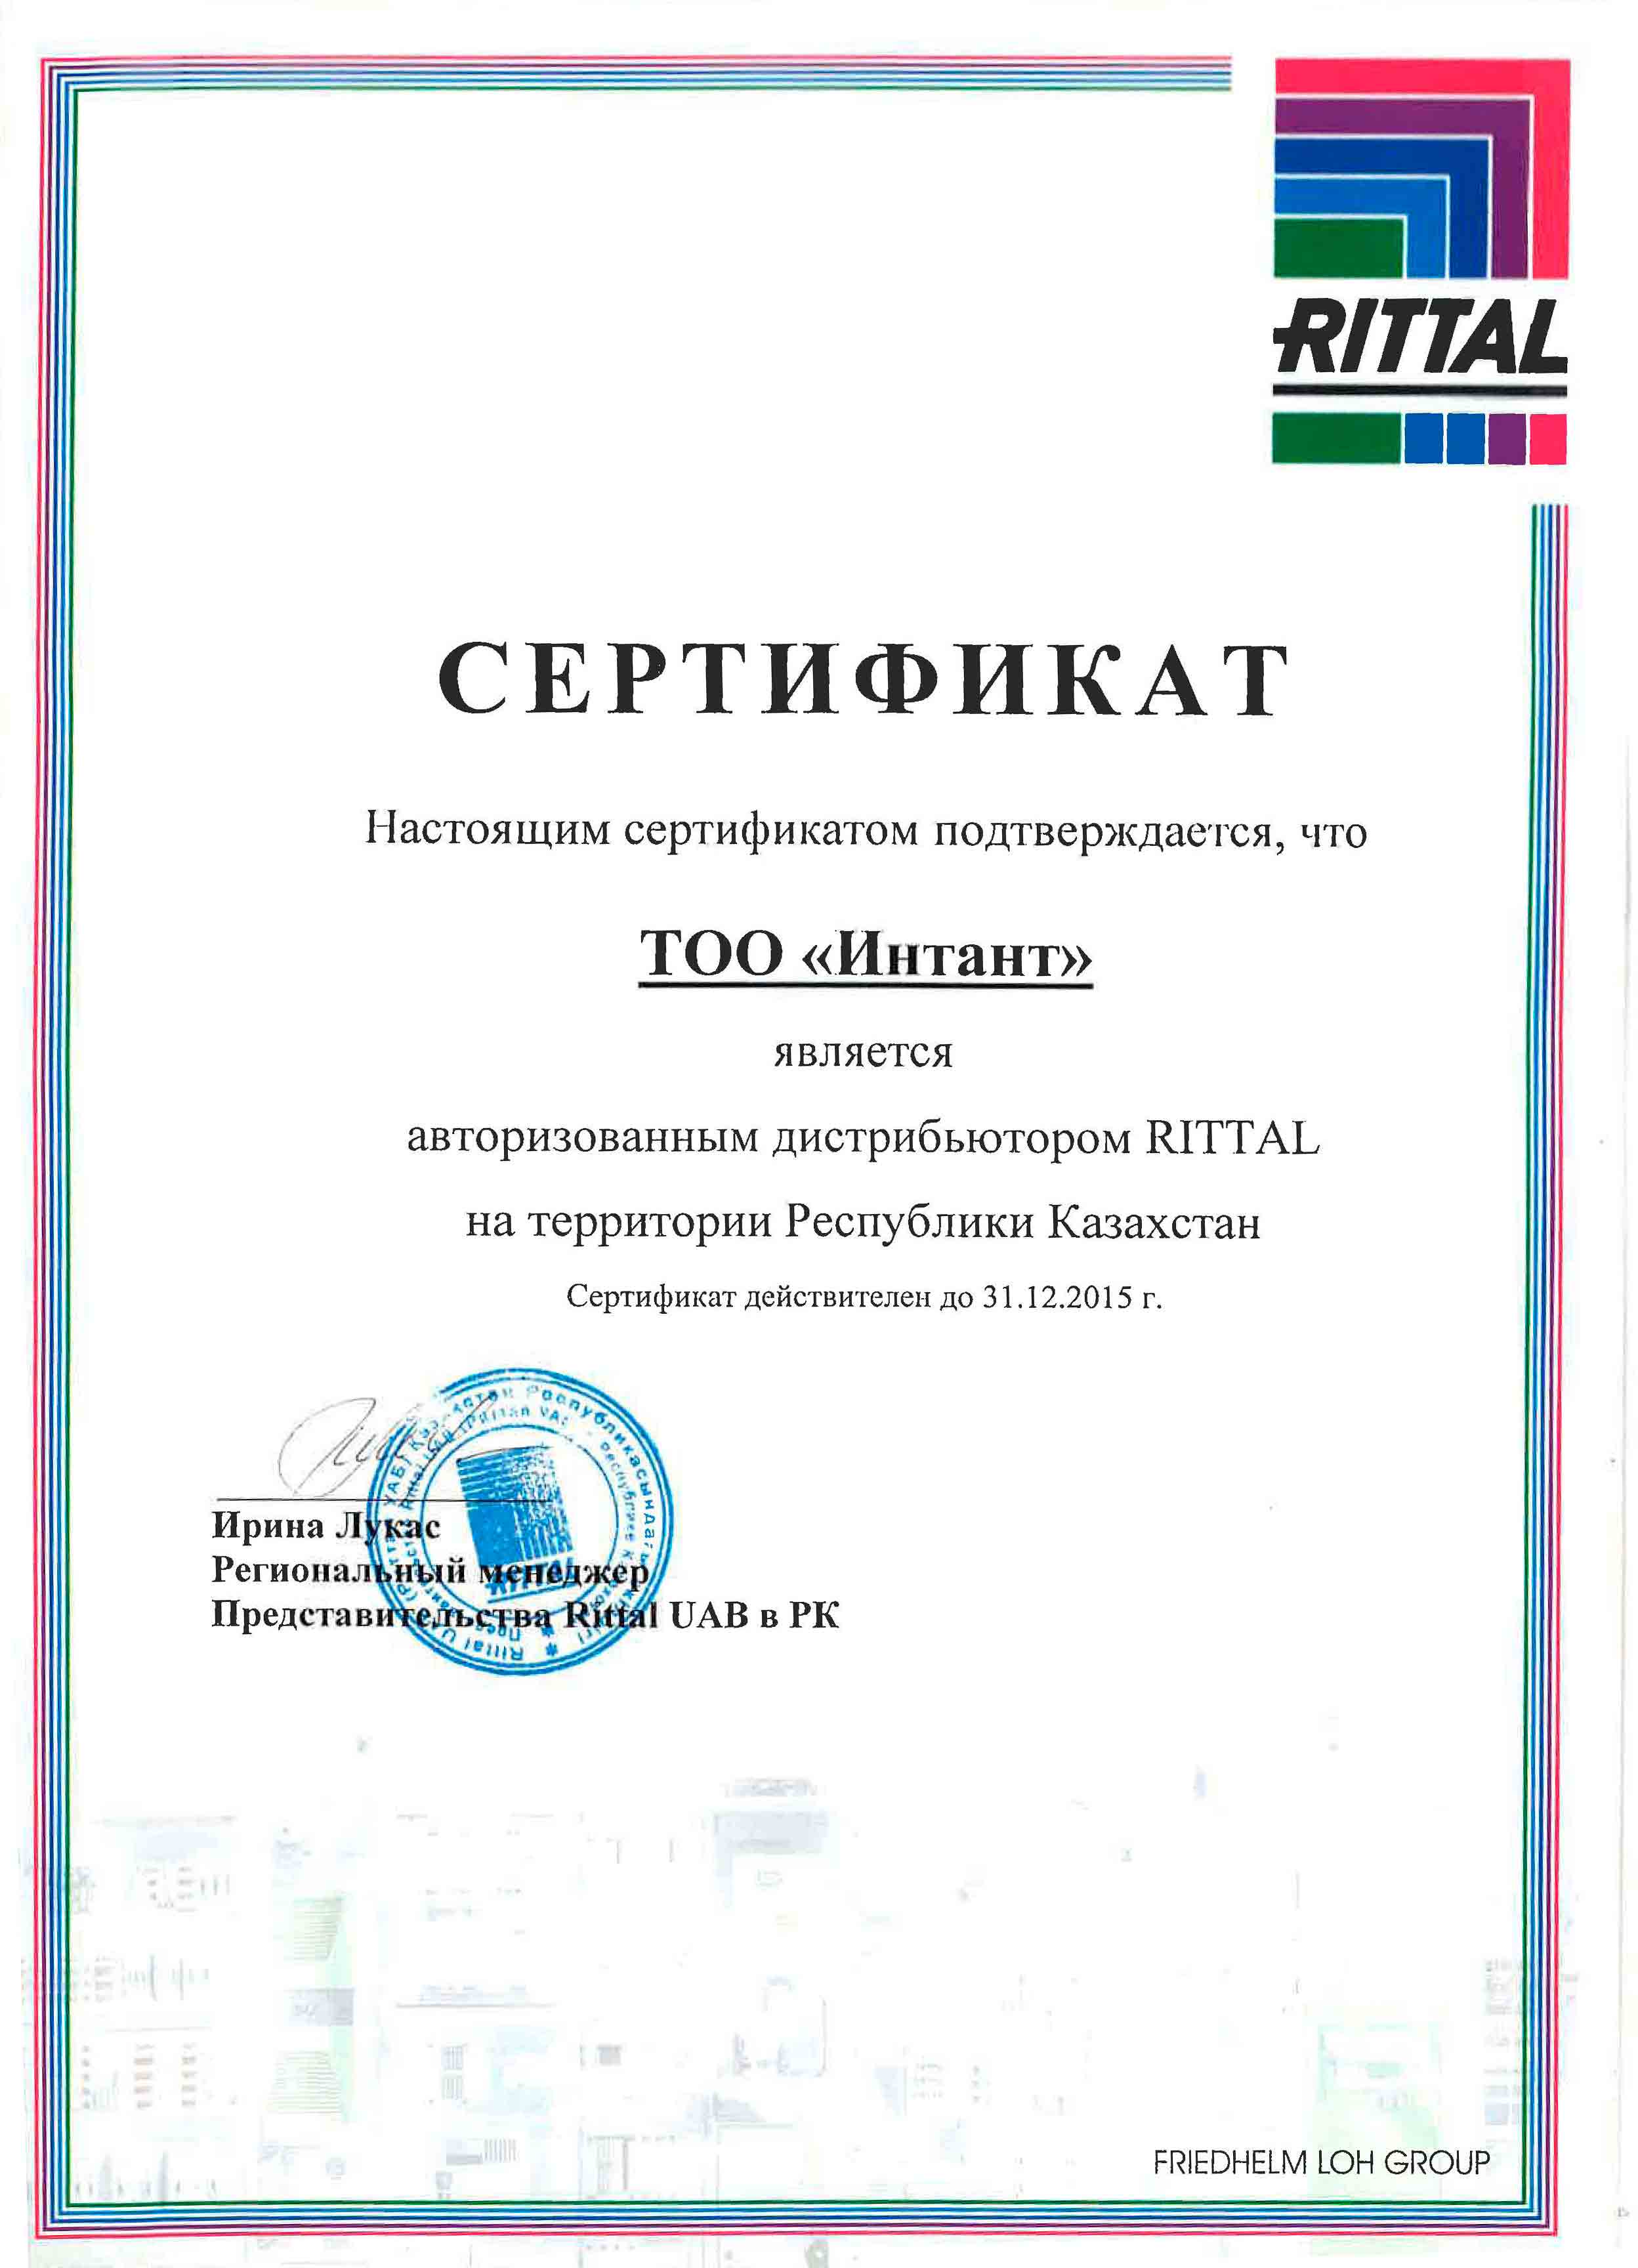 Сертификат RITTAL 2015